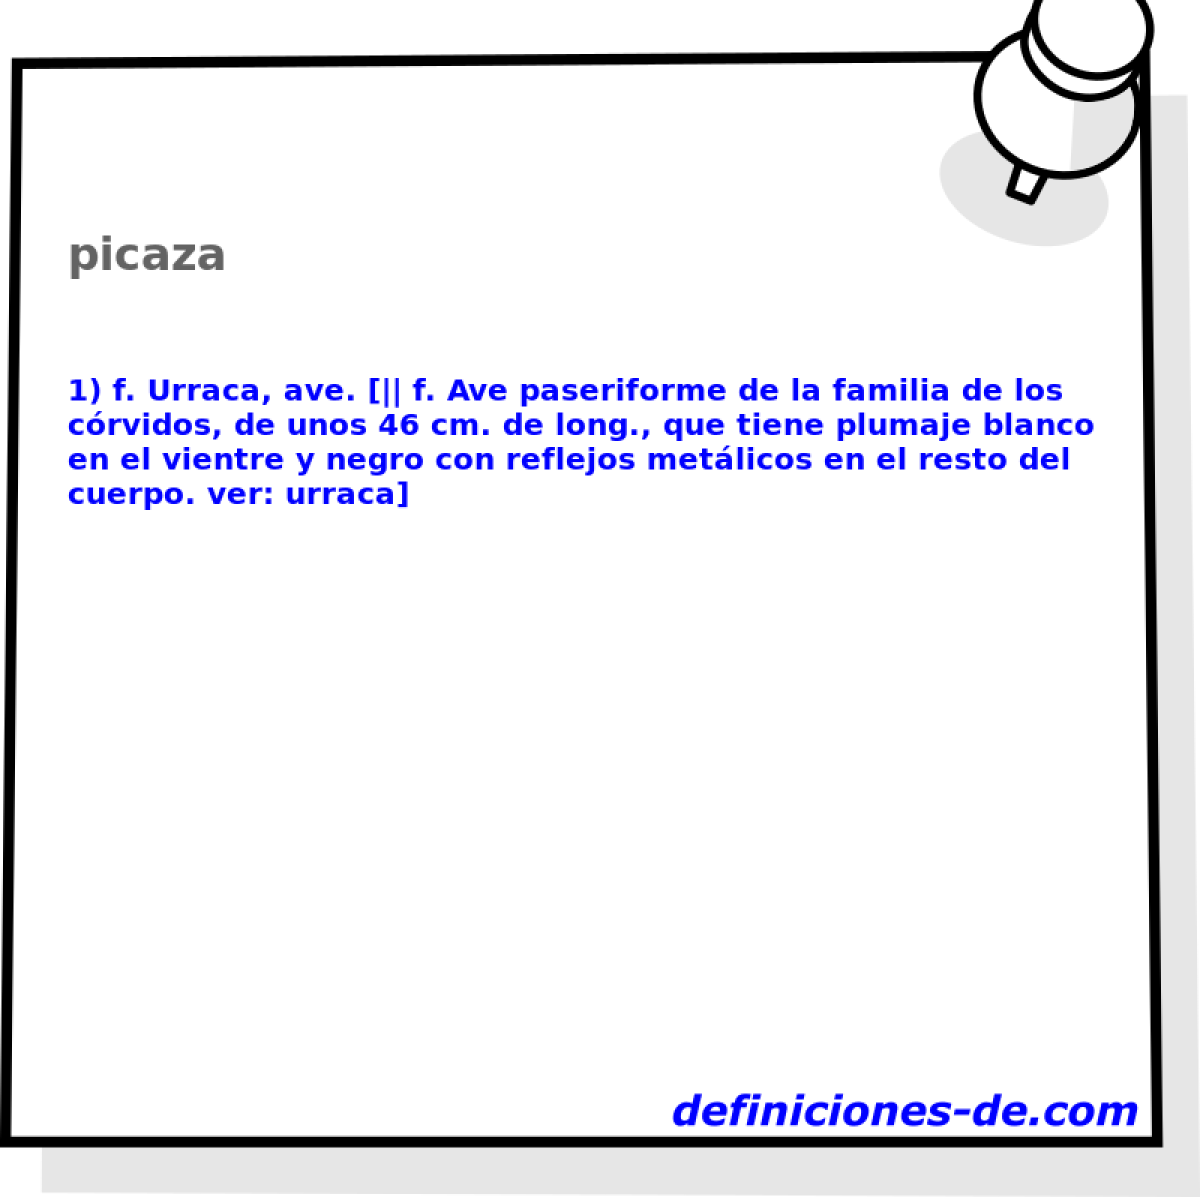 picaza 